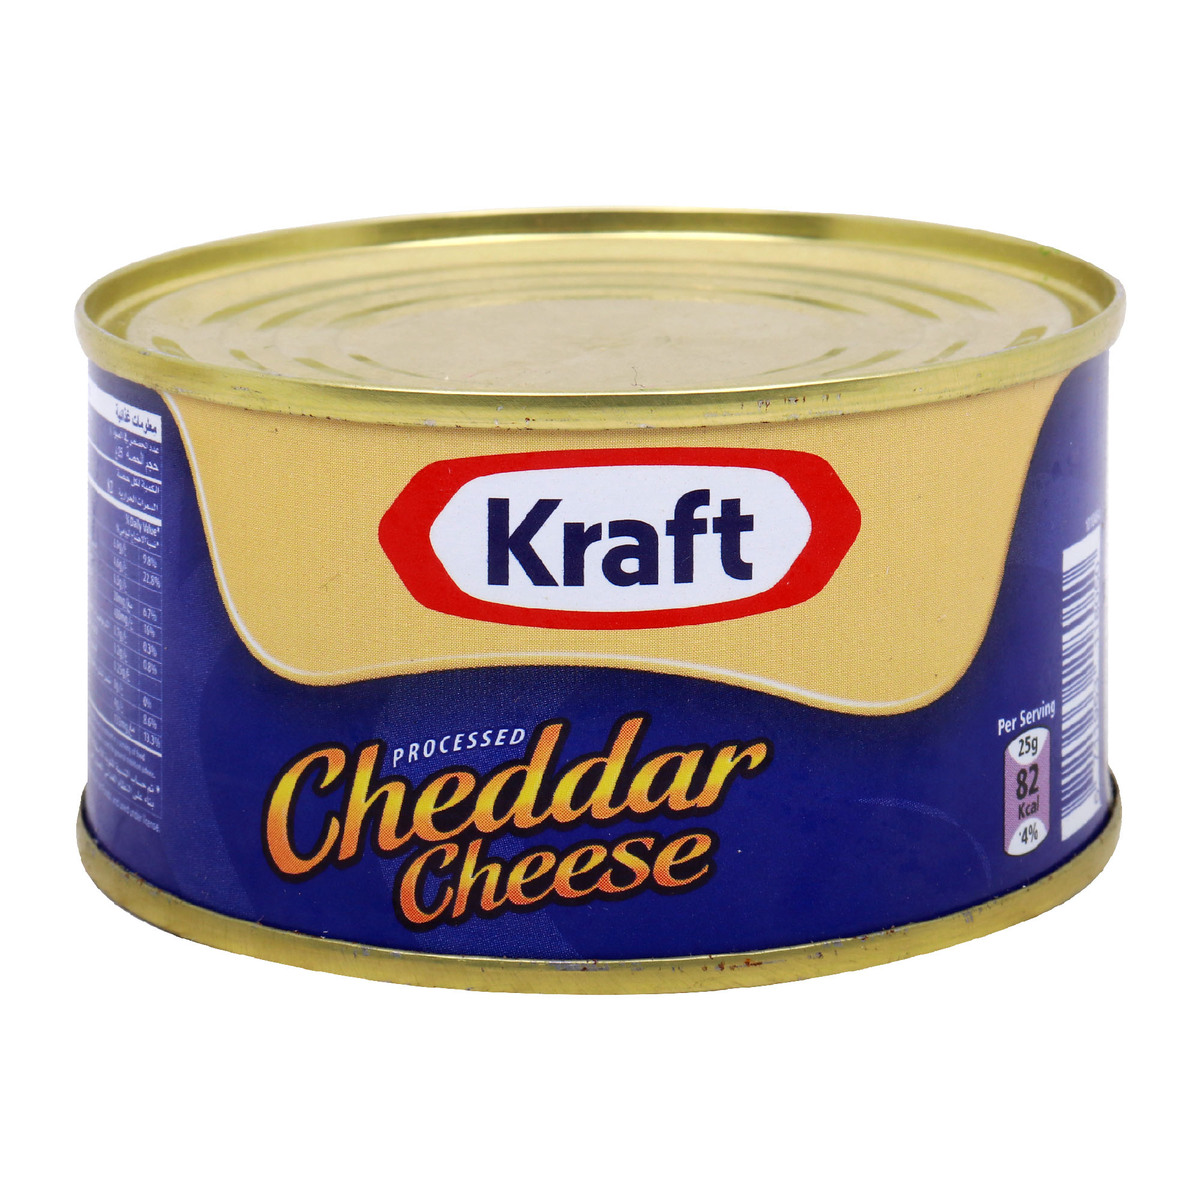 Kraft Cheddar Cheese Cans